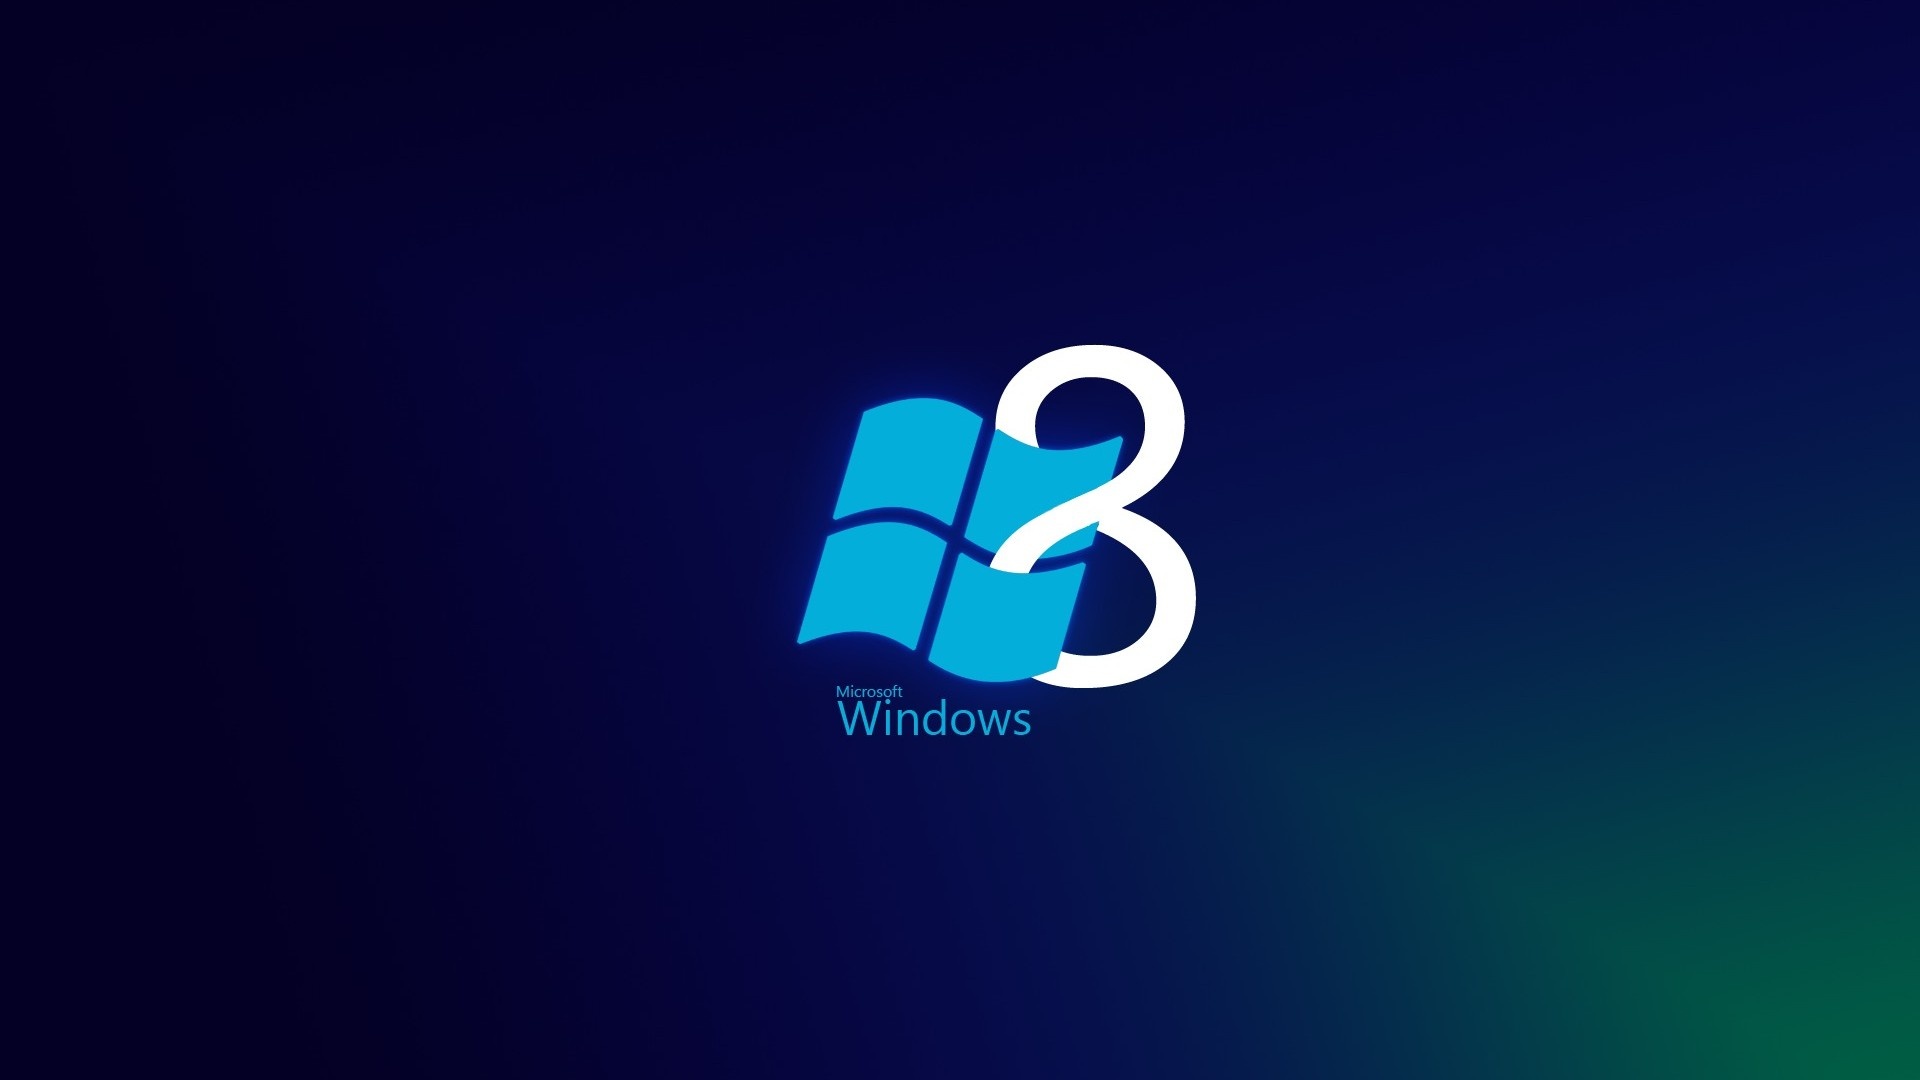 Microsoft Windows 8 Blue Wallpapers   1920x1080   94982